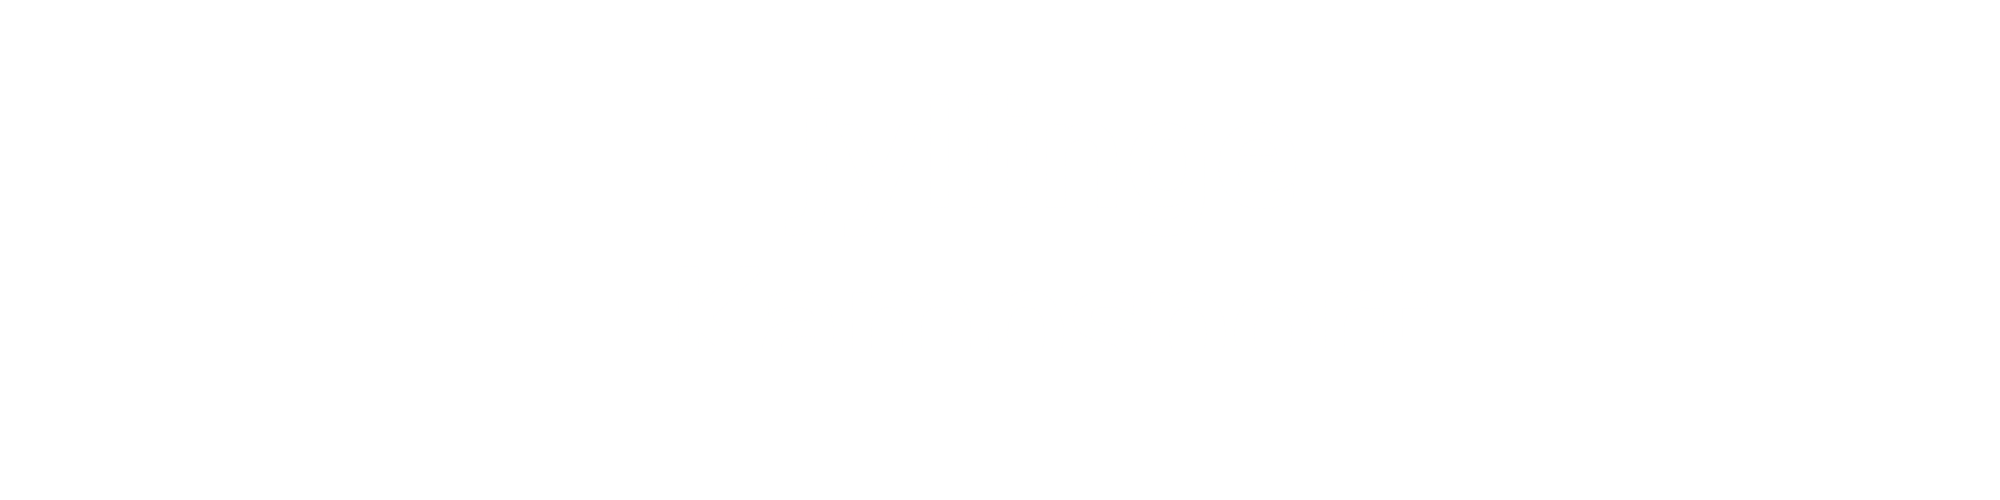 JYLLINGE KAMPSPORT